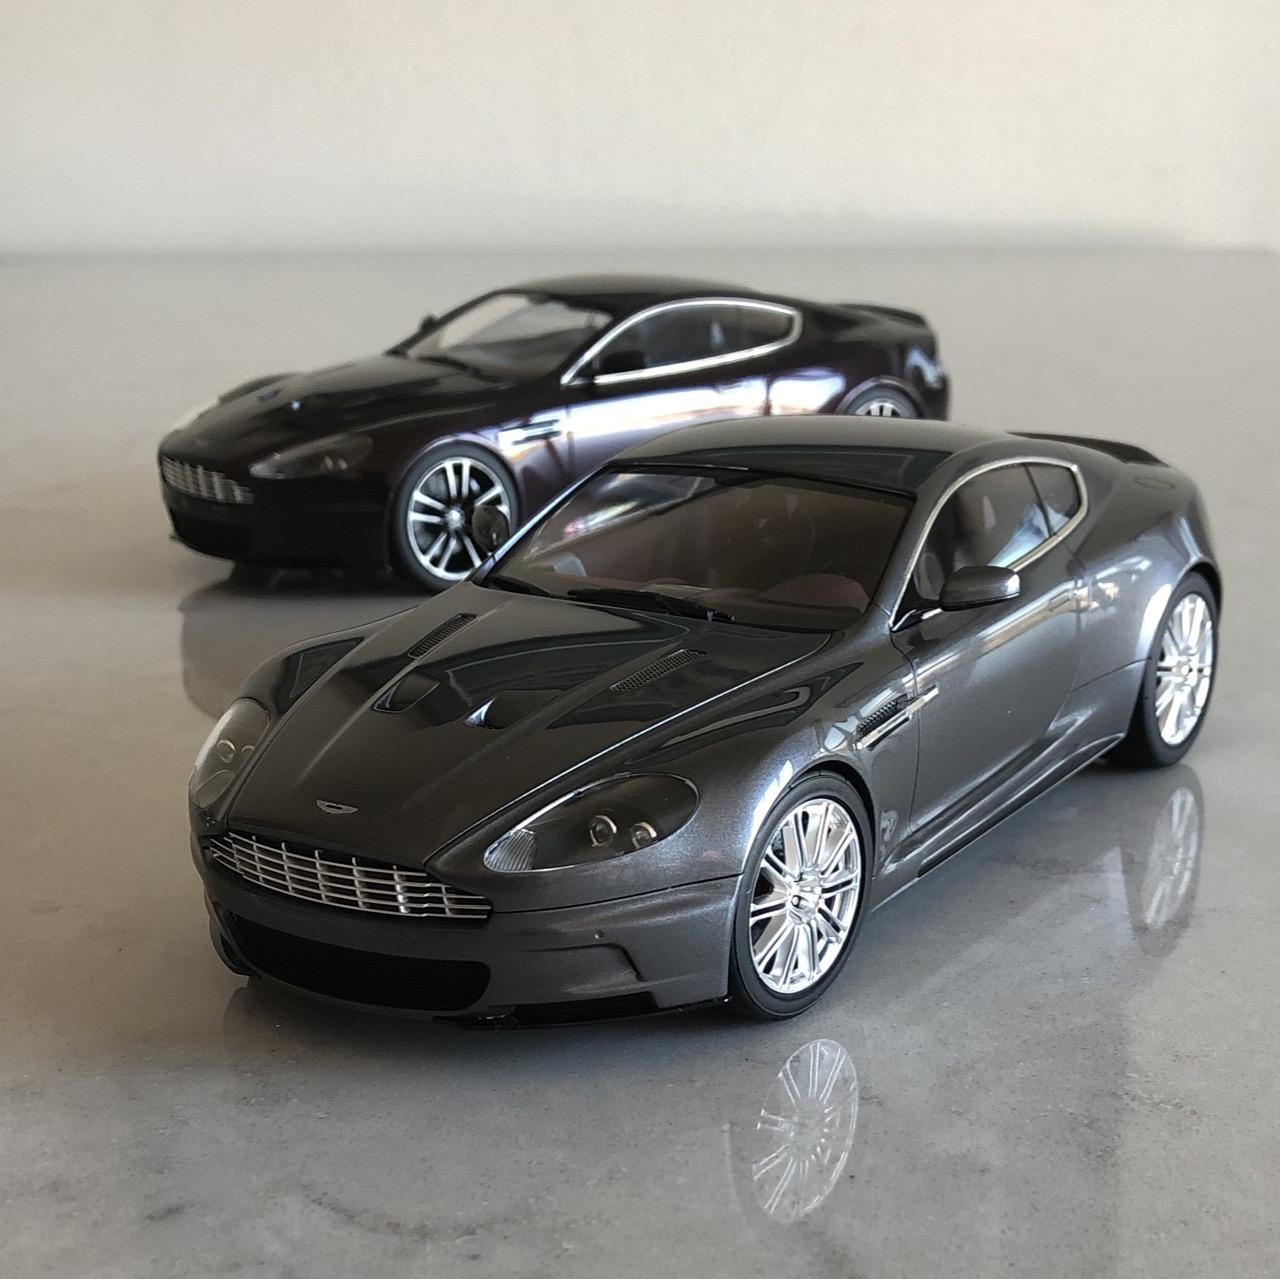 Tamiya Aston Martin DBS - Model Cars - Model Cars Magazine Forum